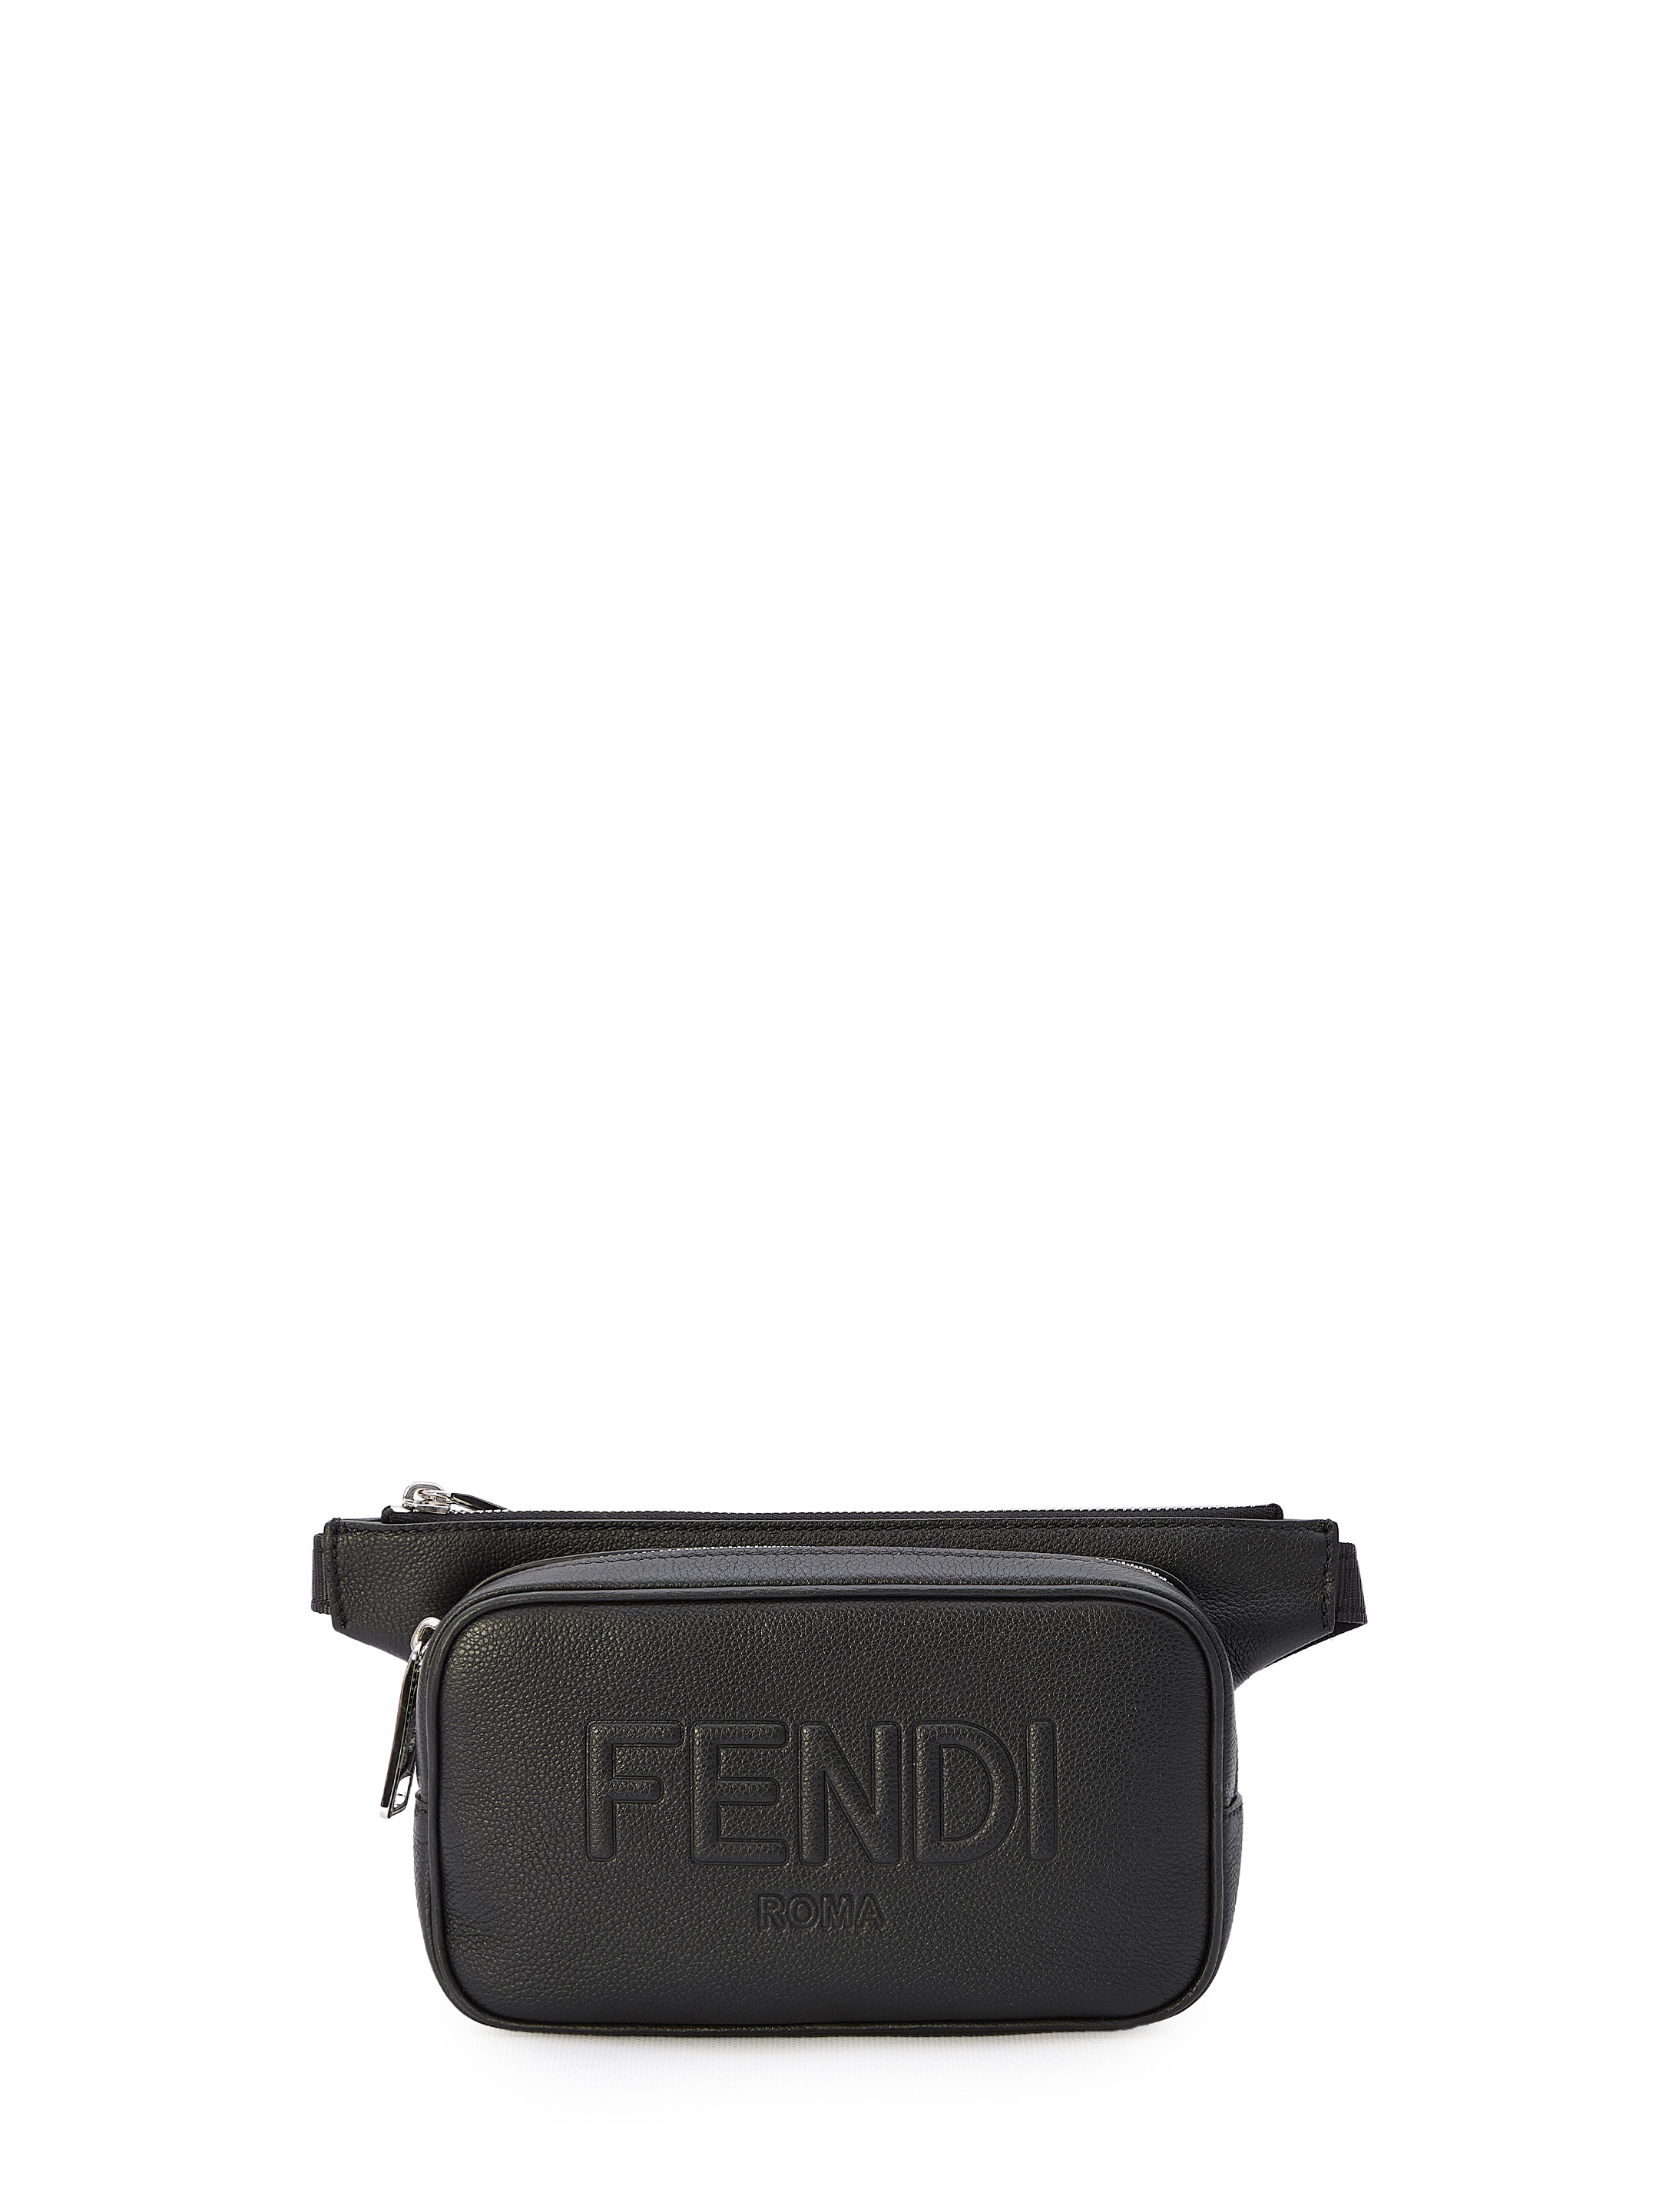 Сумка Fendi Fendi Roma belt, черный